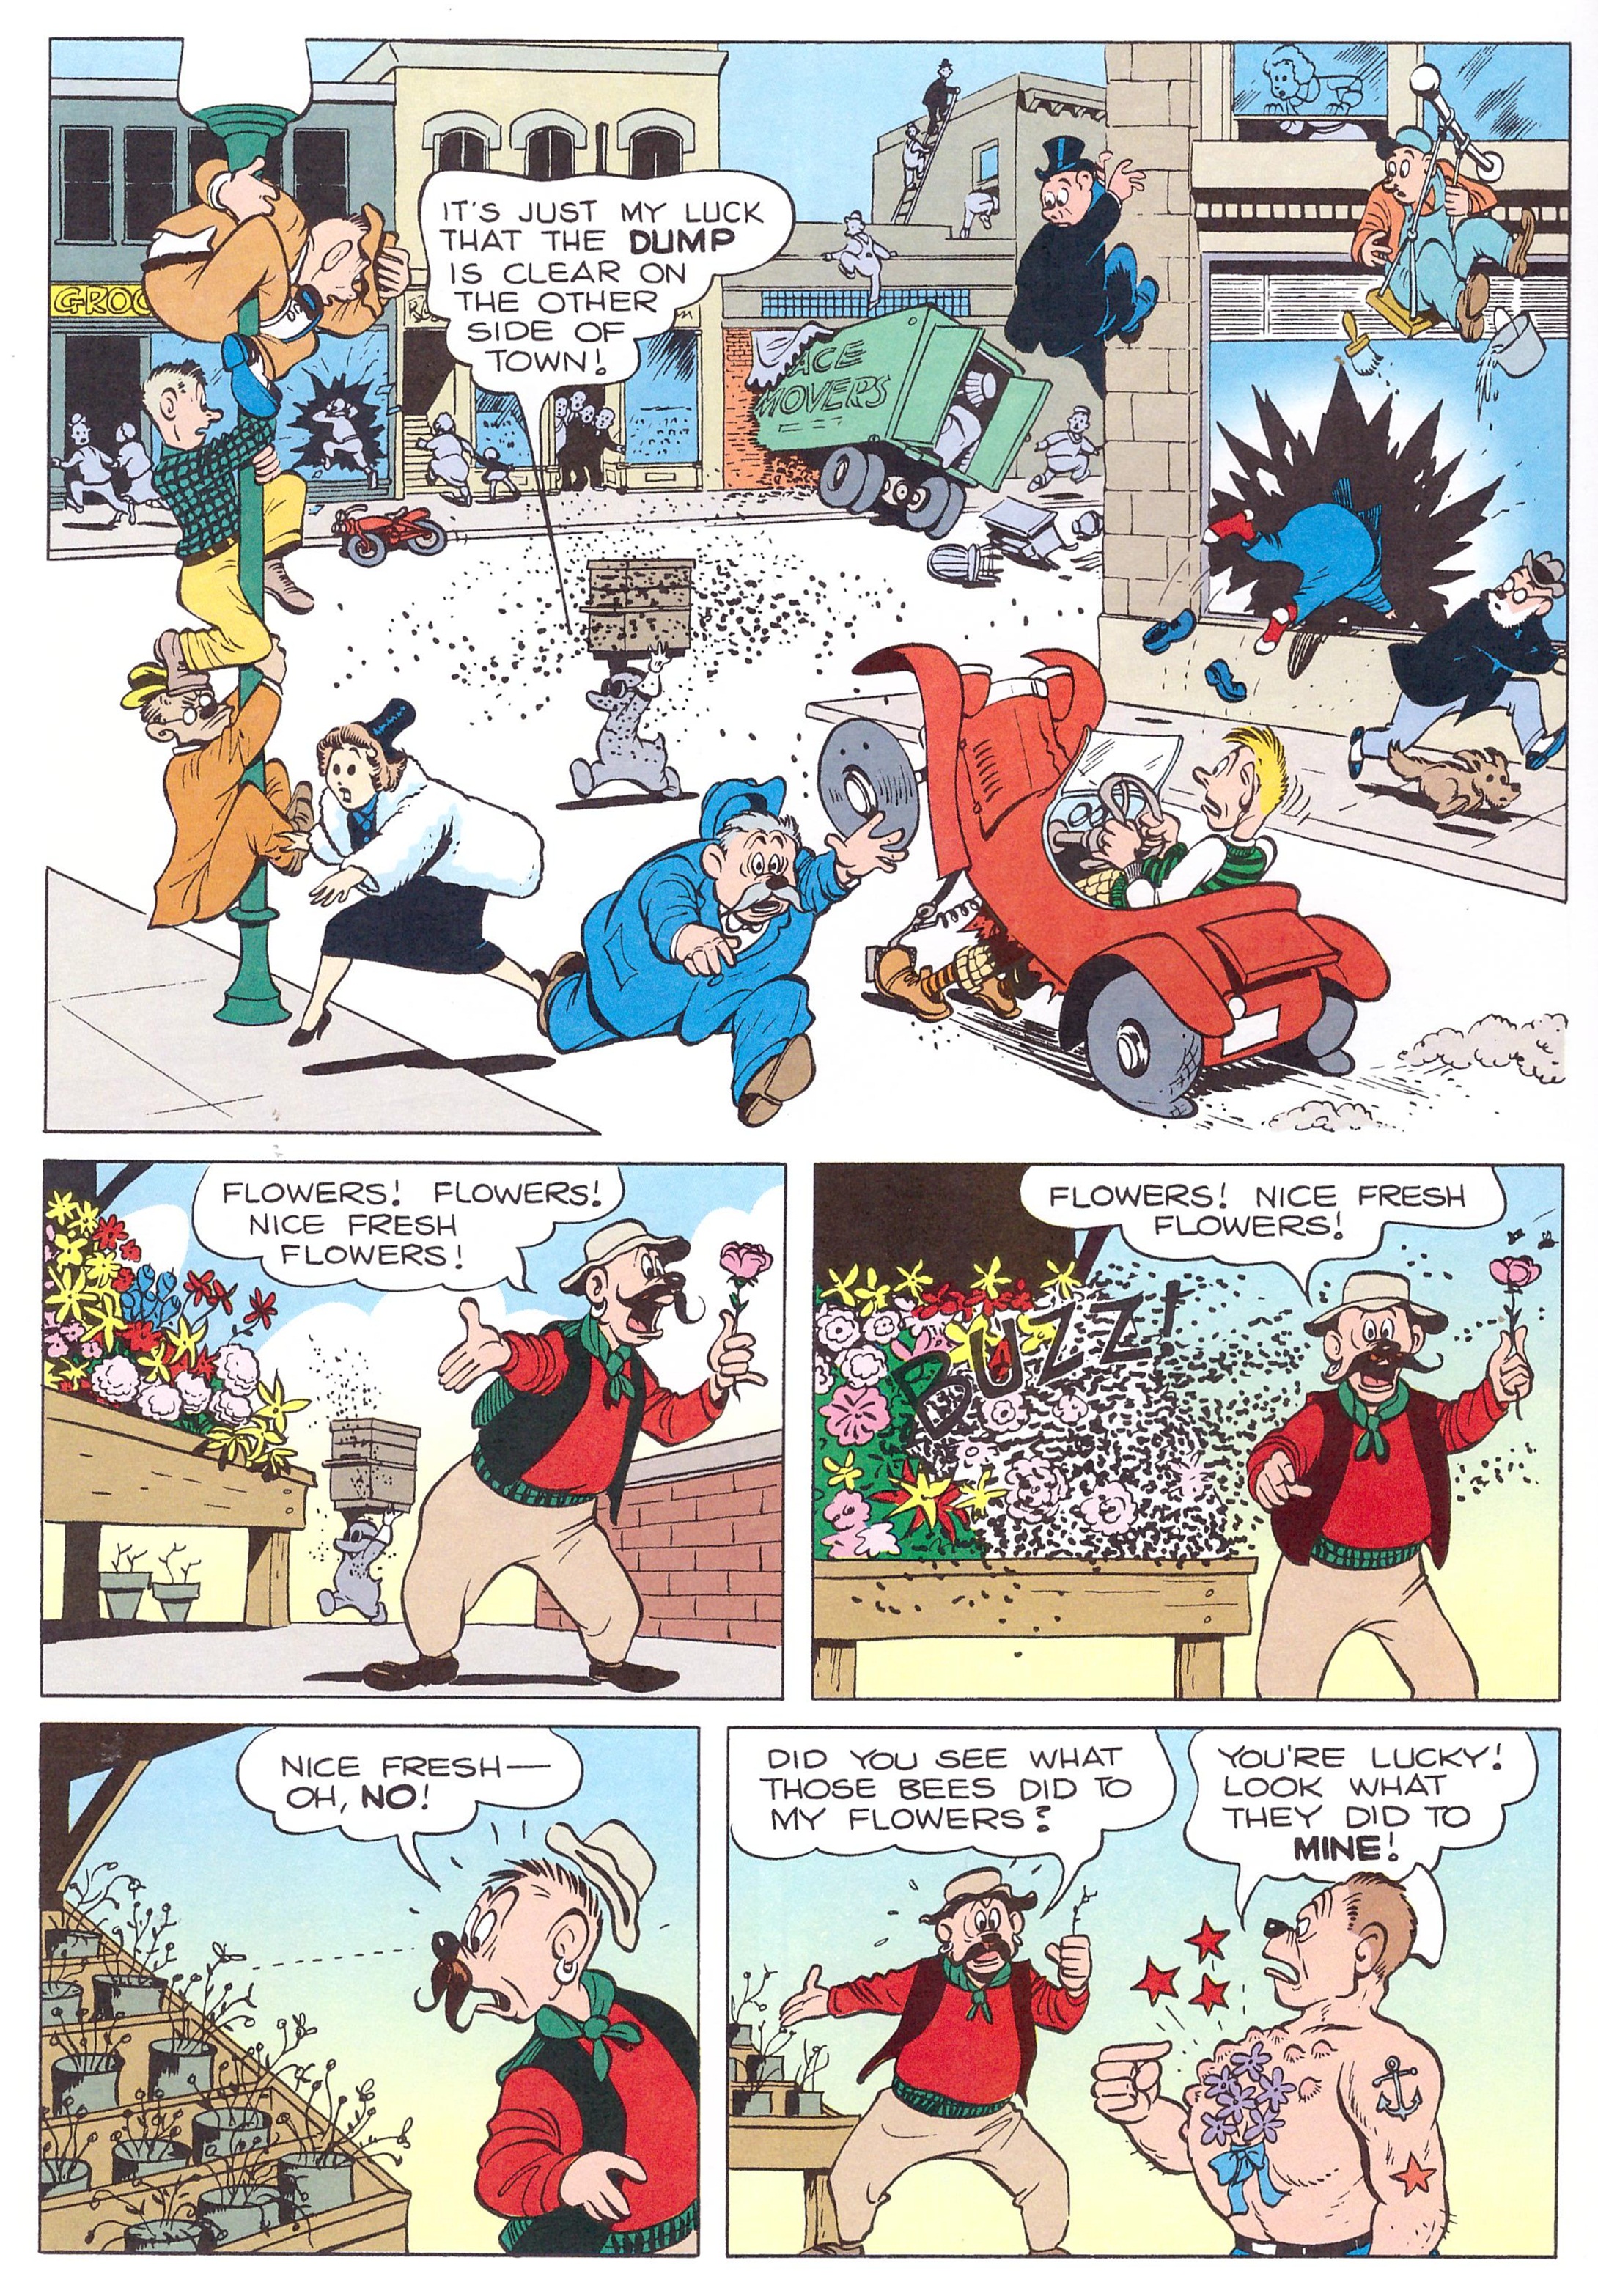 Walt Disney Comics & Stories by Carl Barks 24 review